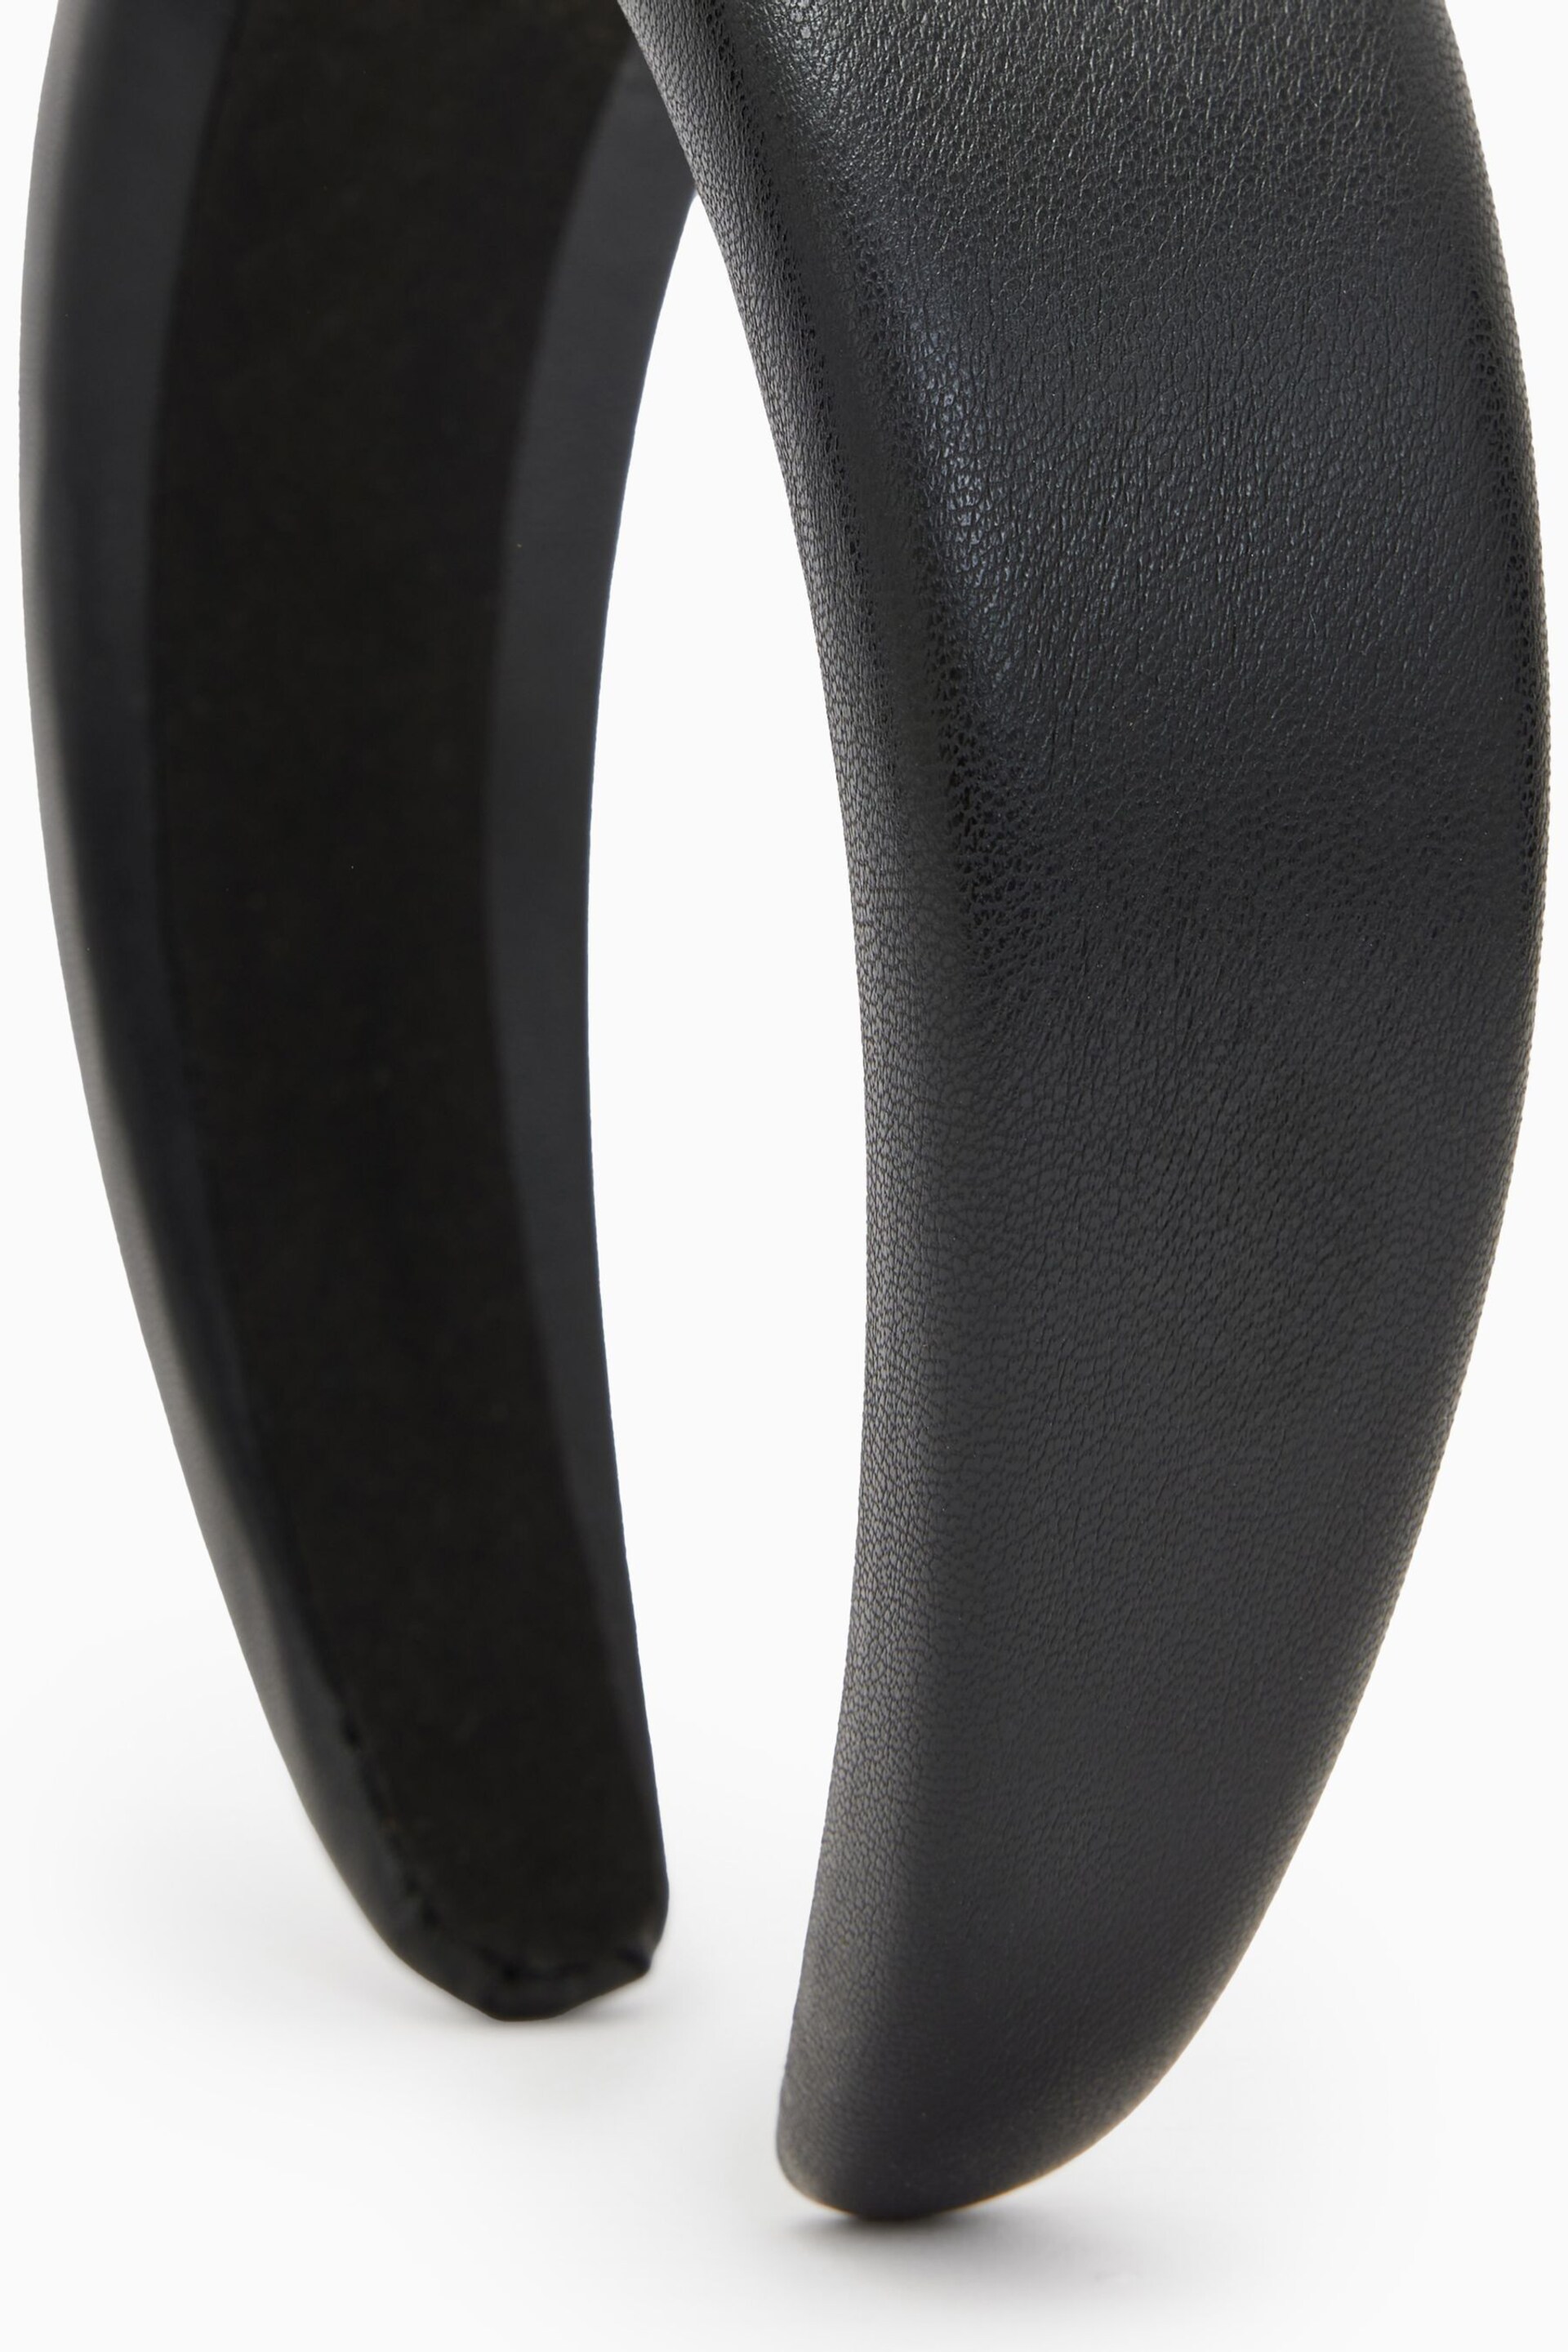 AllSaints Black Lea Headband - Image 3 of 3